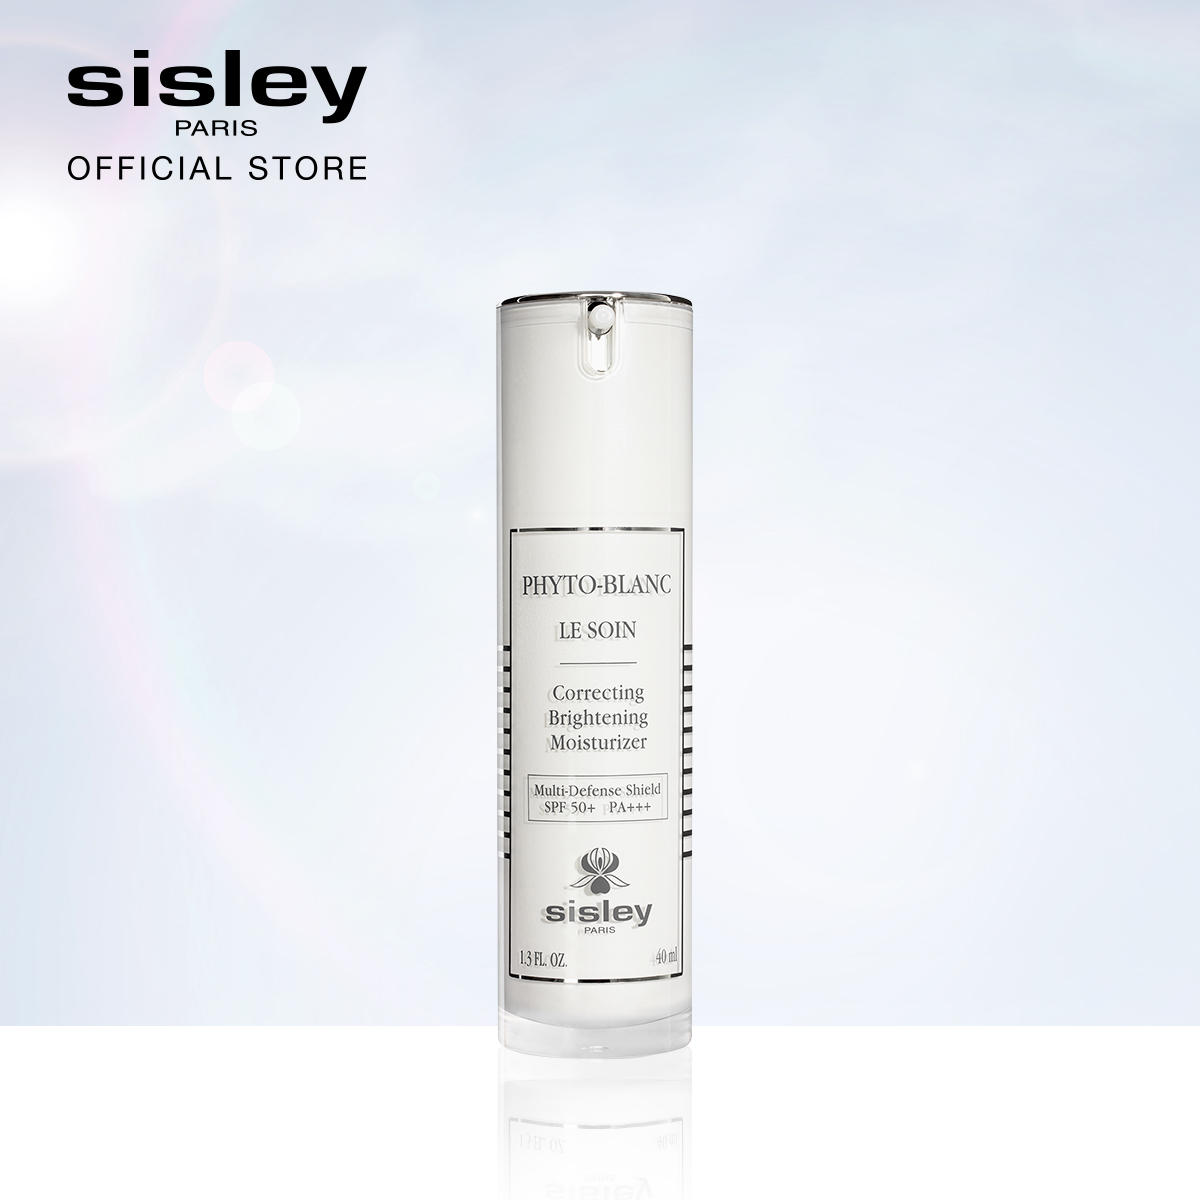 Sisley Phyto-Blanc Le Soin Correcting Brightening Moisturizer